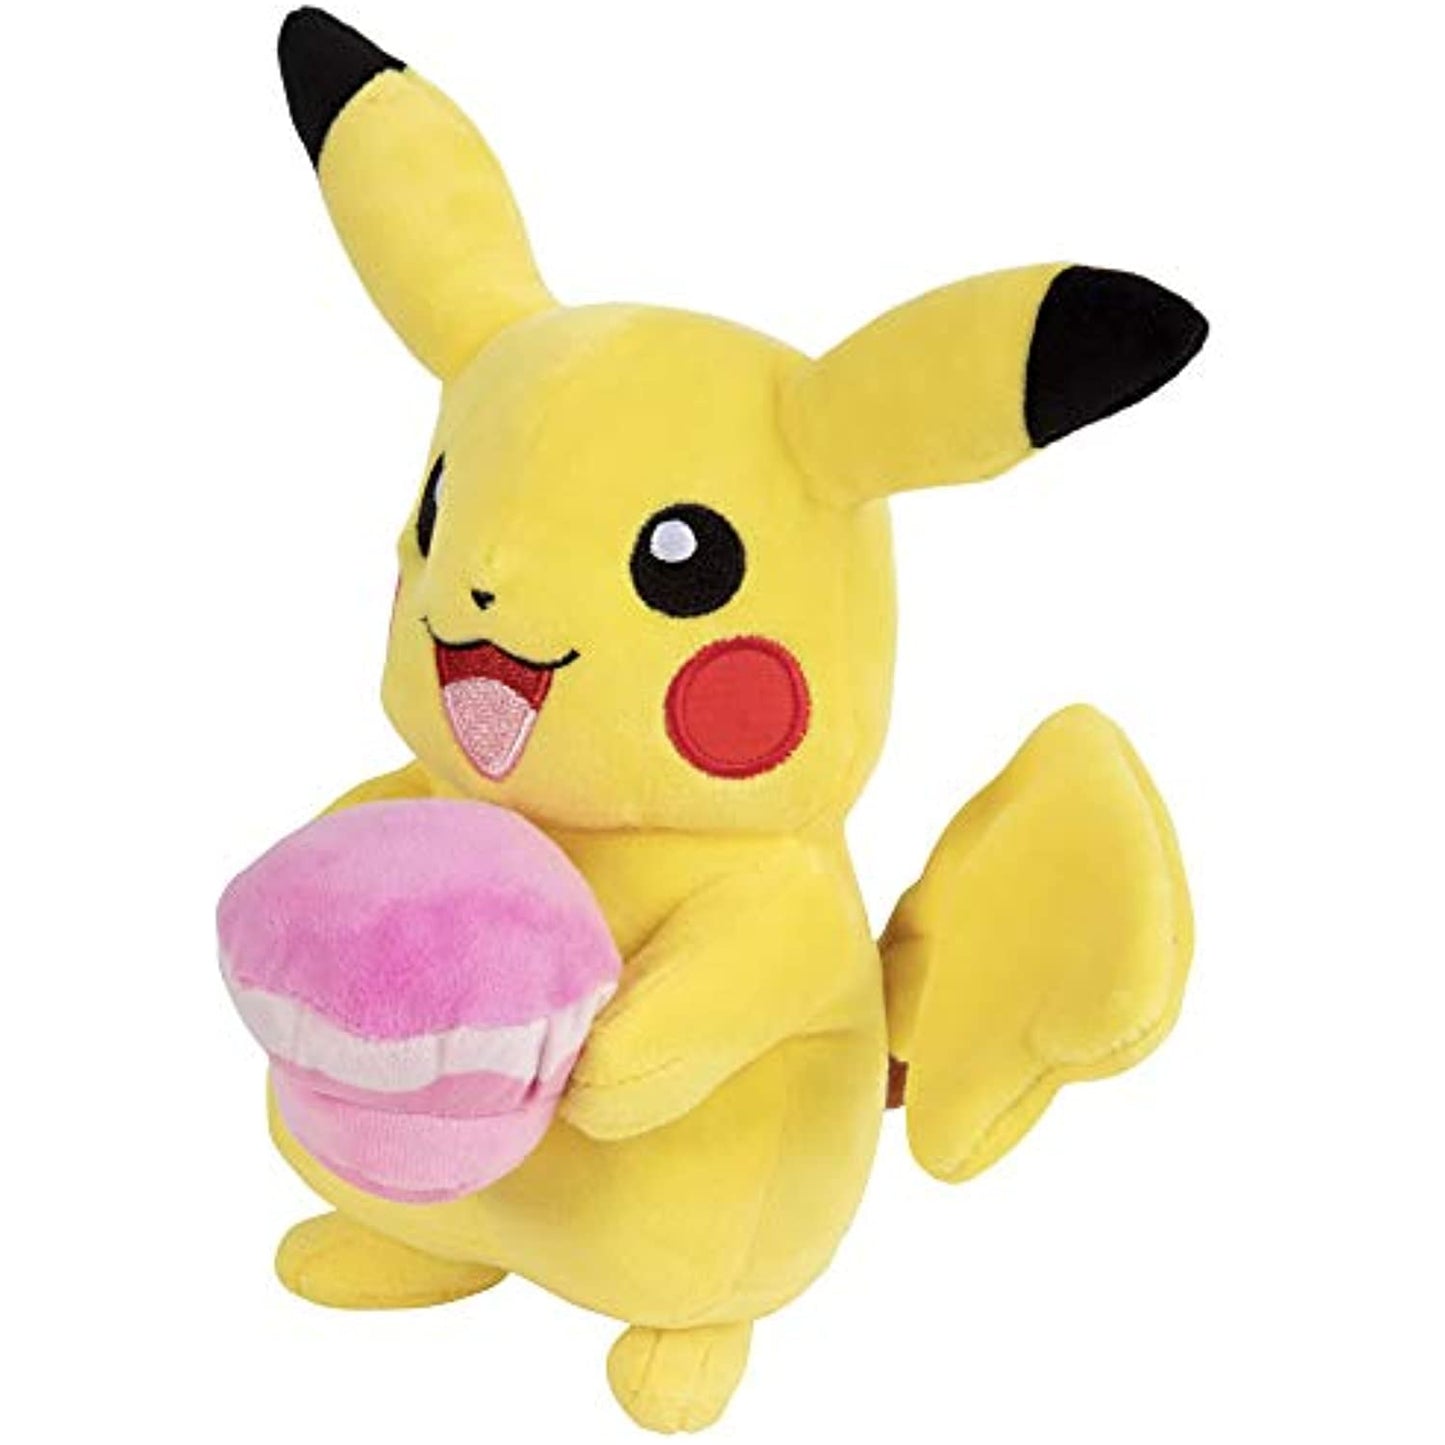 Pokémon Pikachu with Easter Egg 8" Plush Stuffed Animal